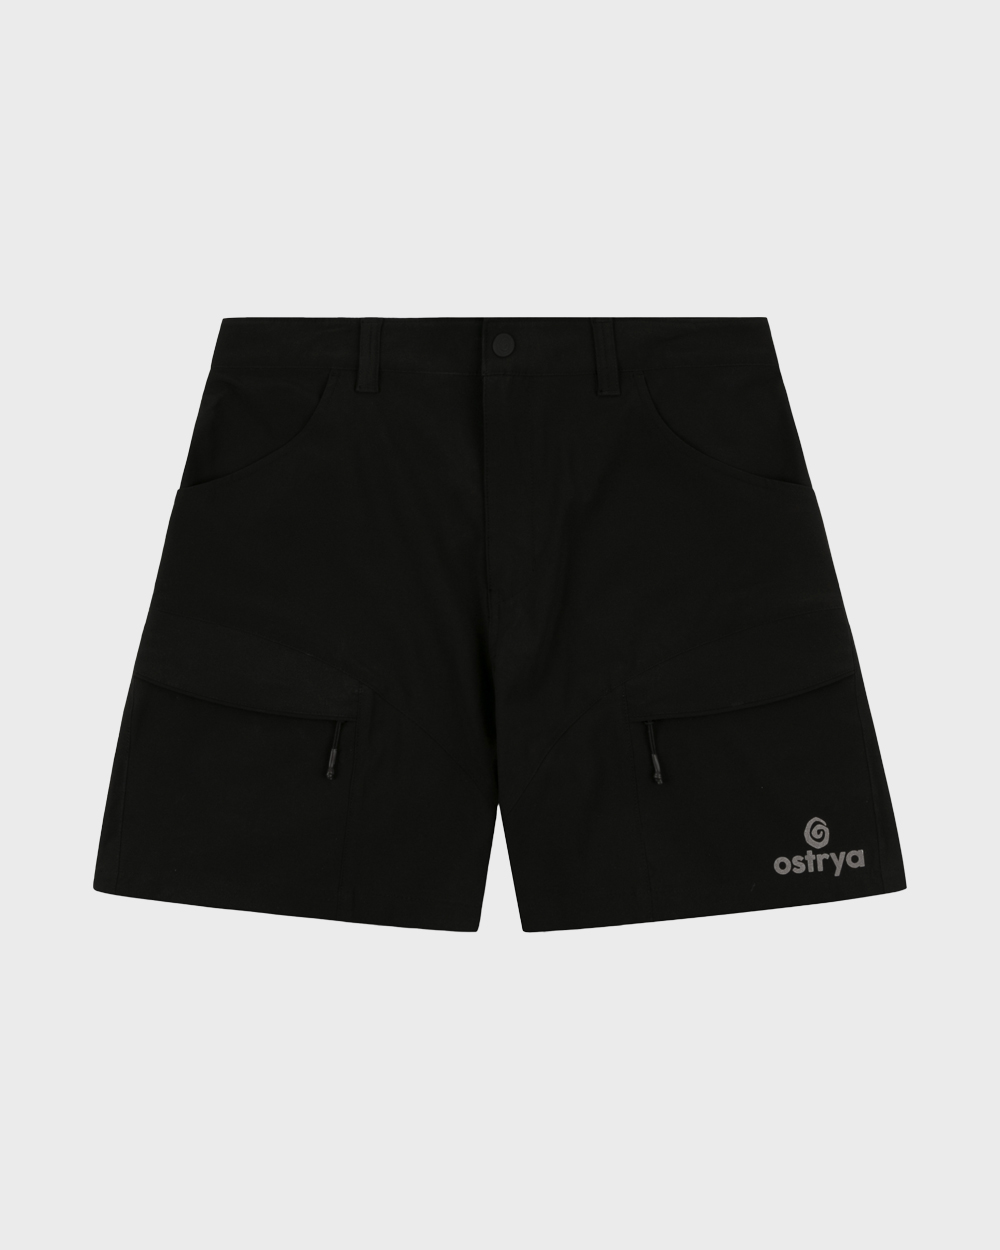 OSTRYA Yarrow Hiking Shorts (Black)